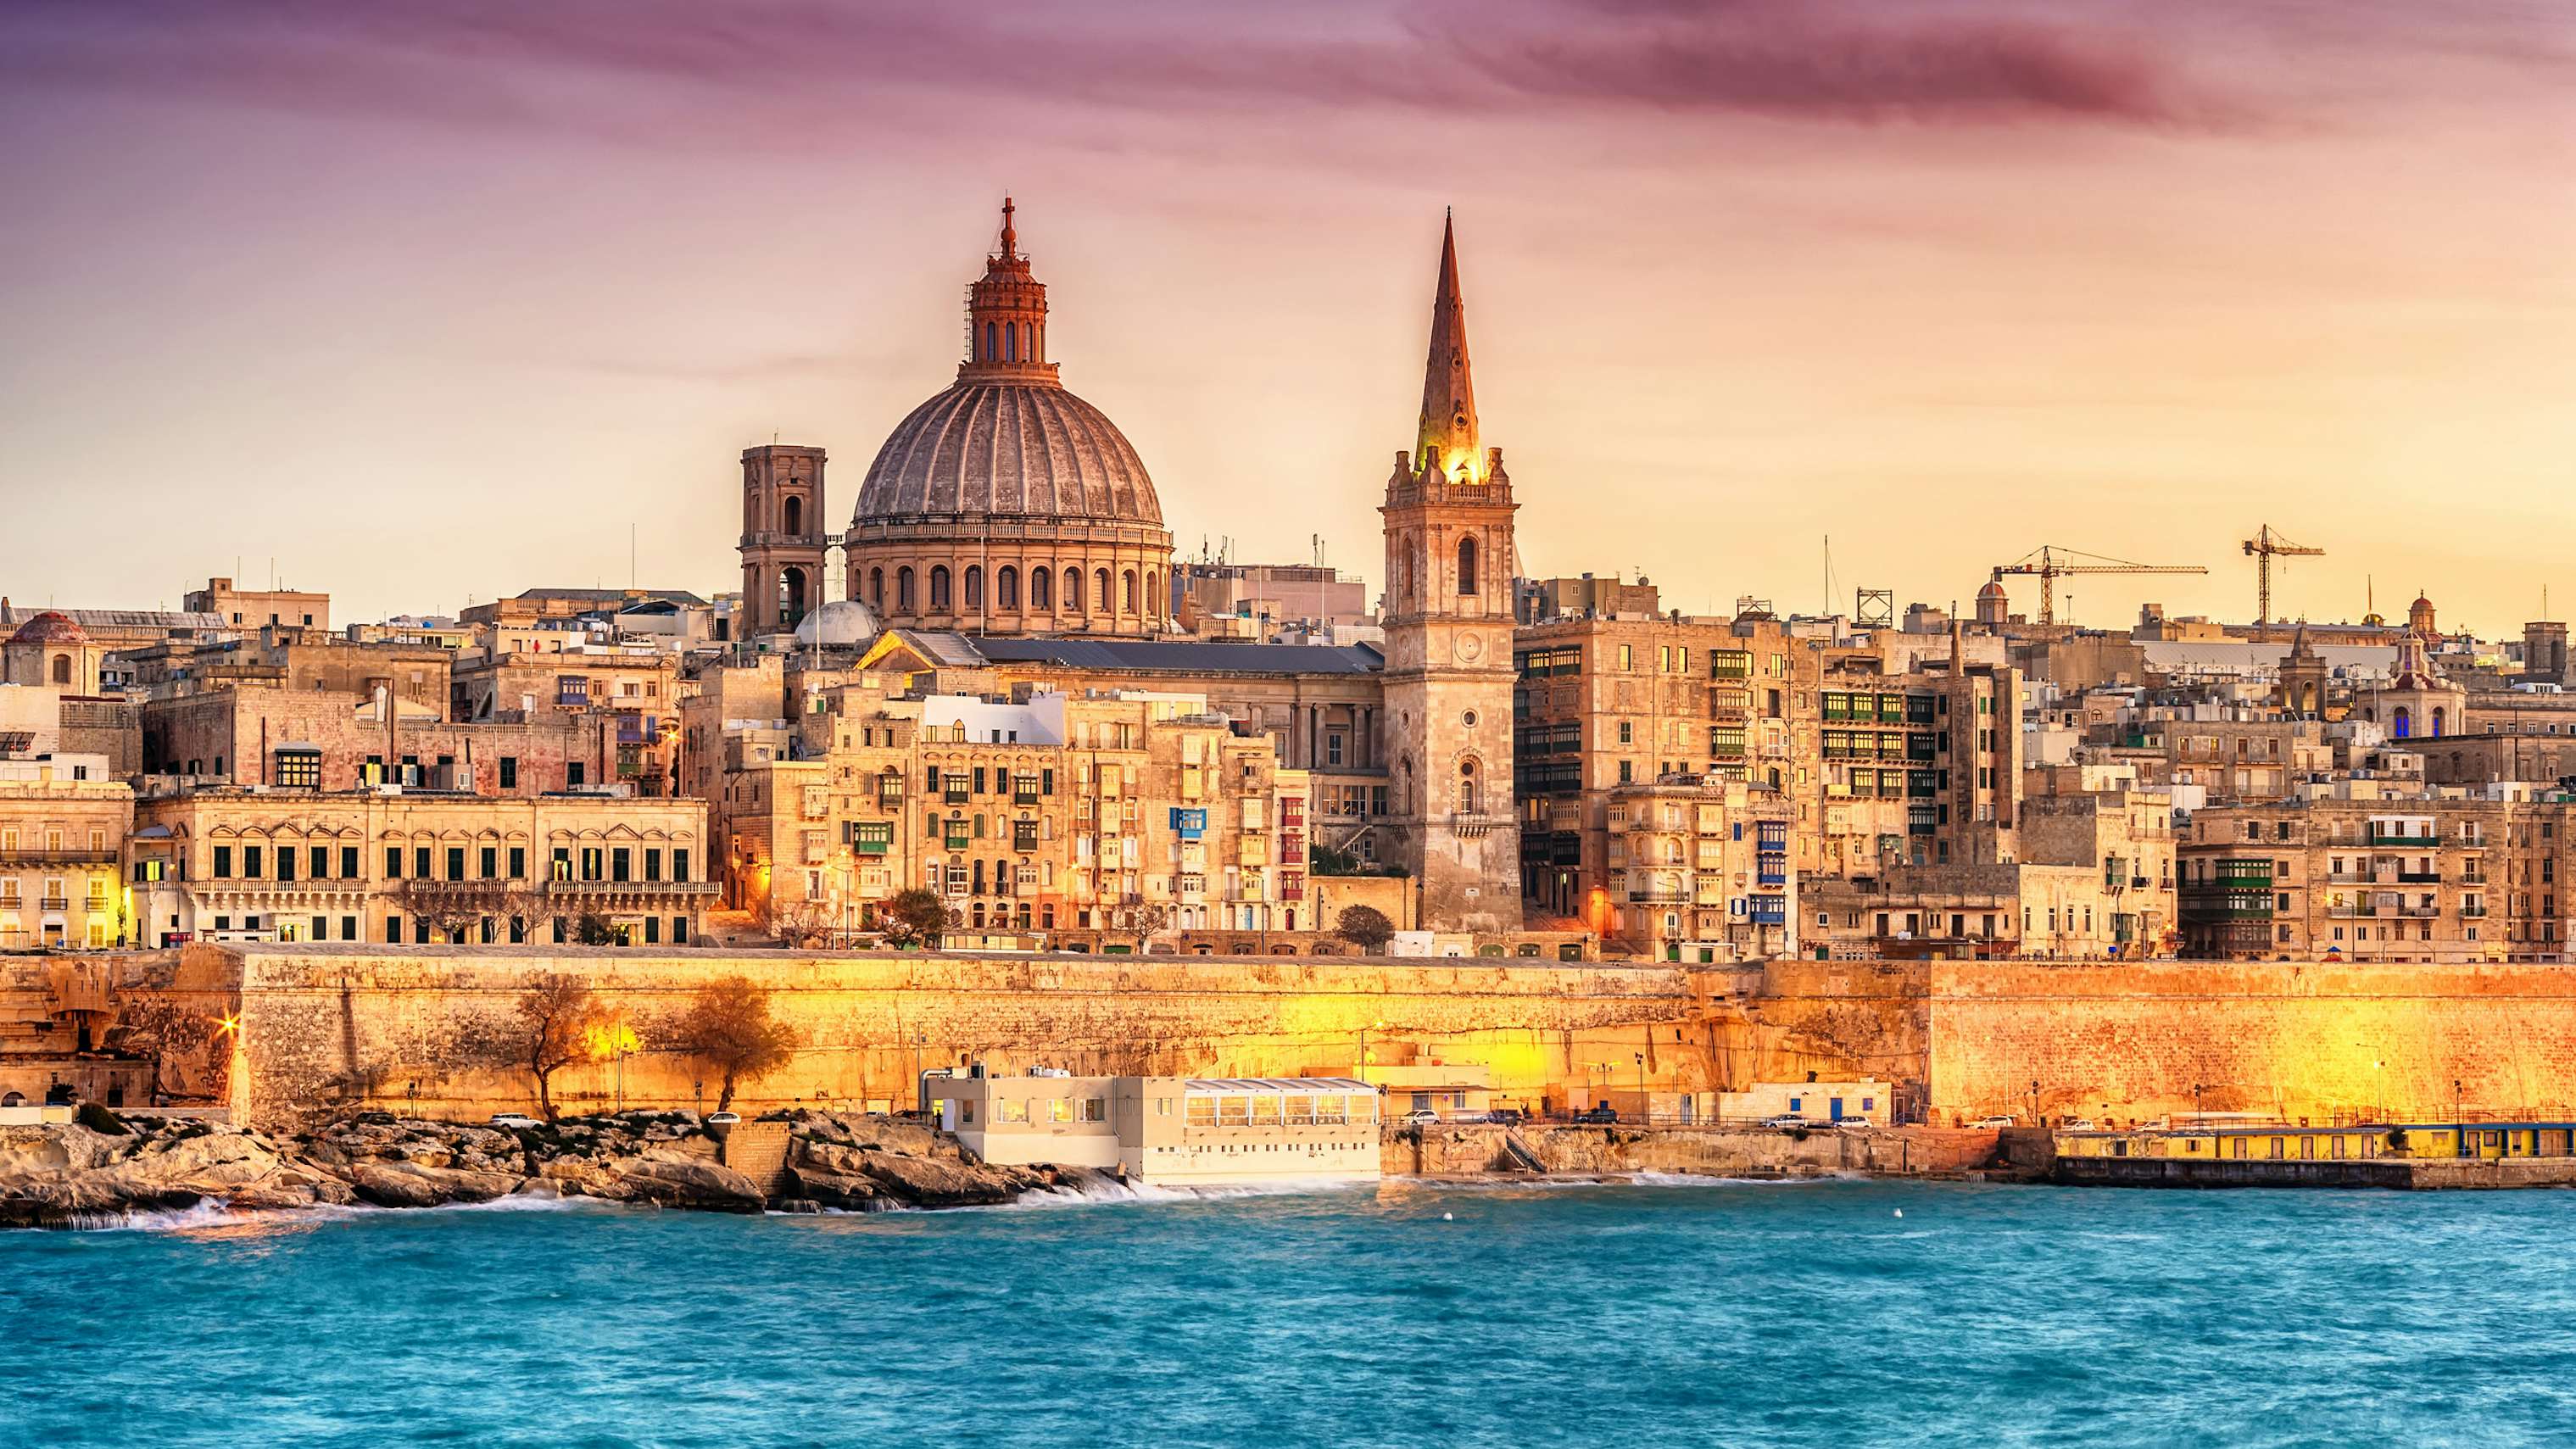 View of Valletta, Malta from the sea